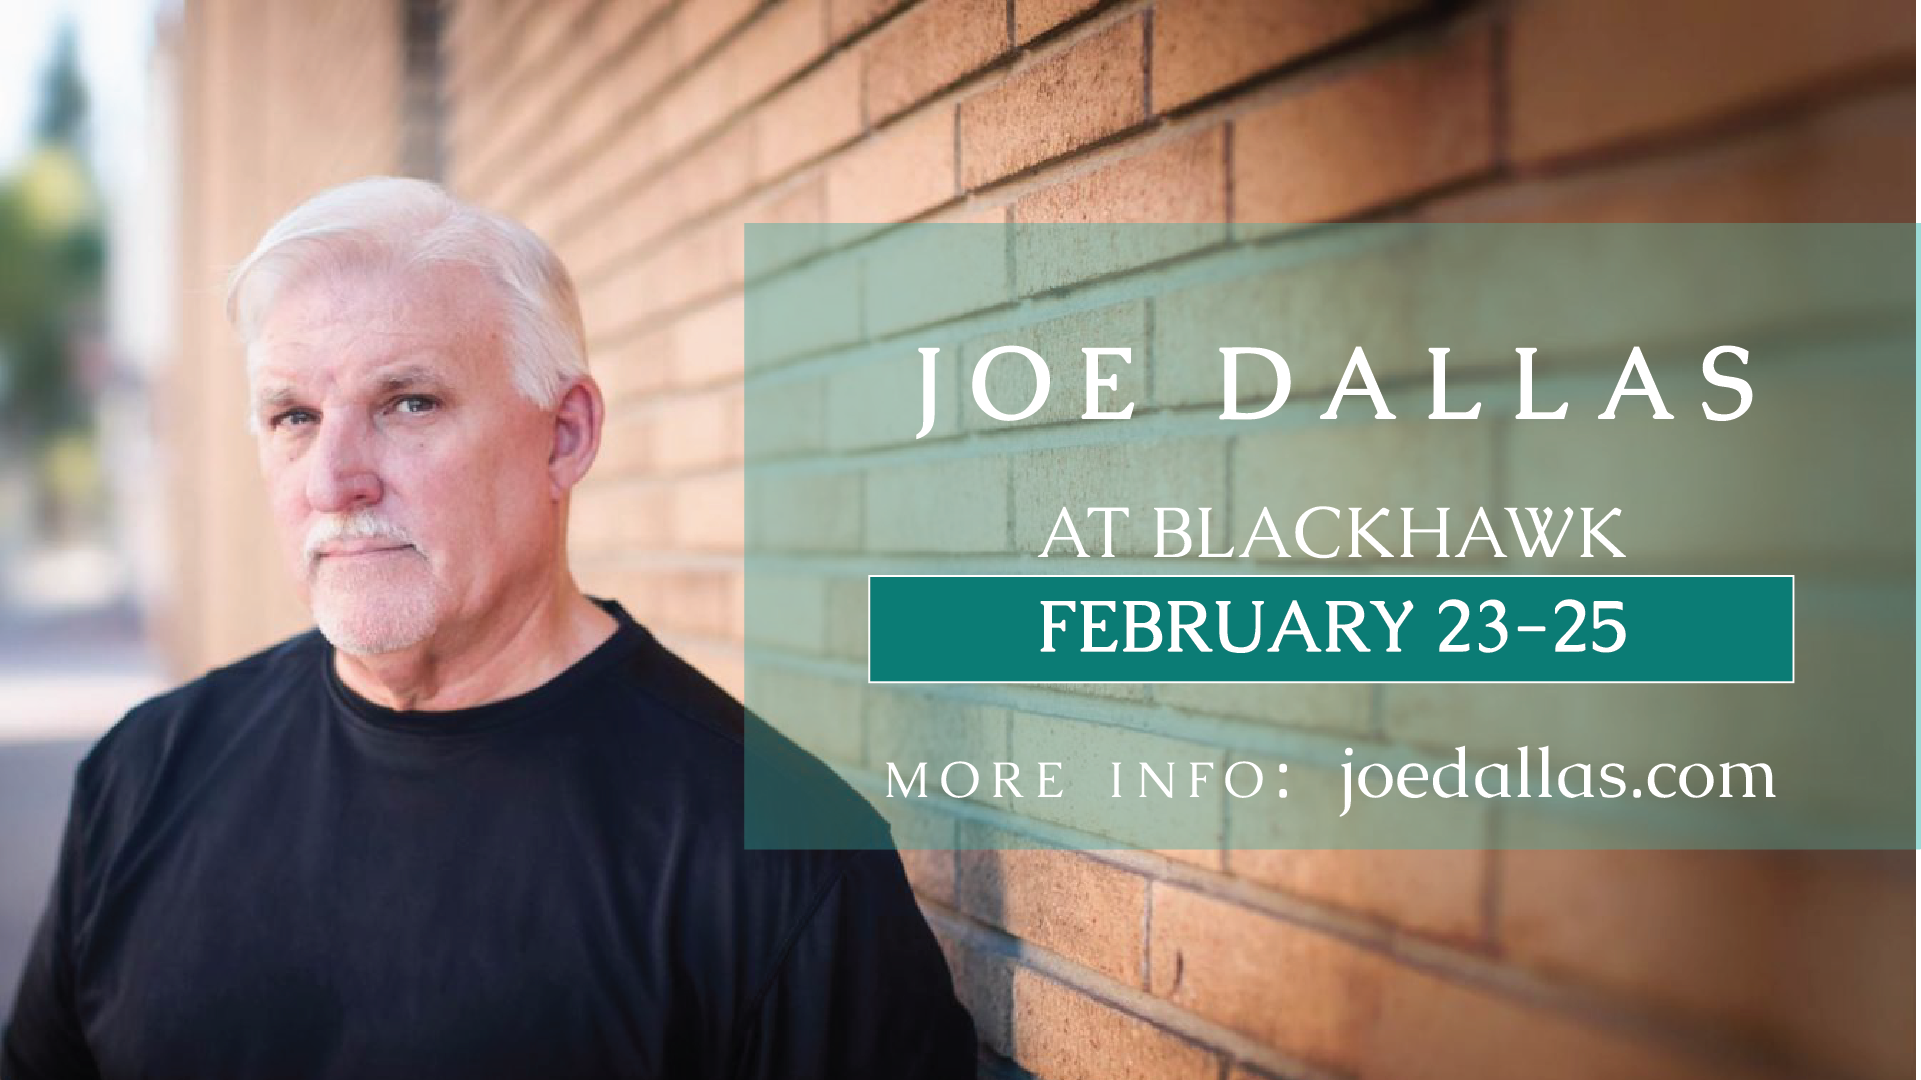 Joe Dallas coming to Blackhawk